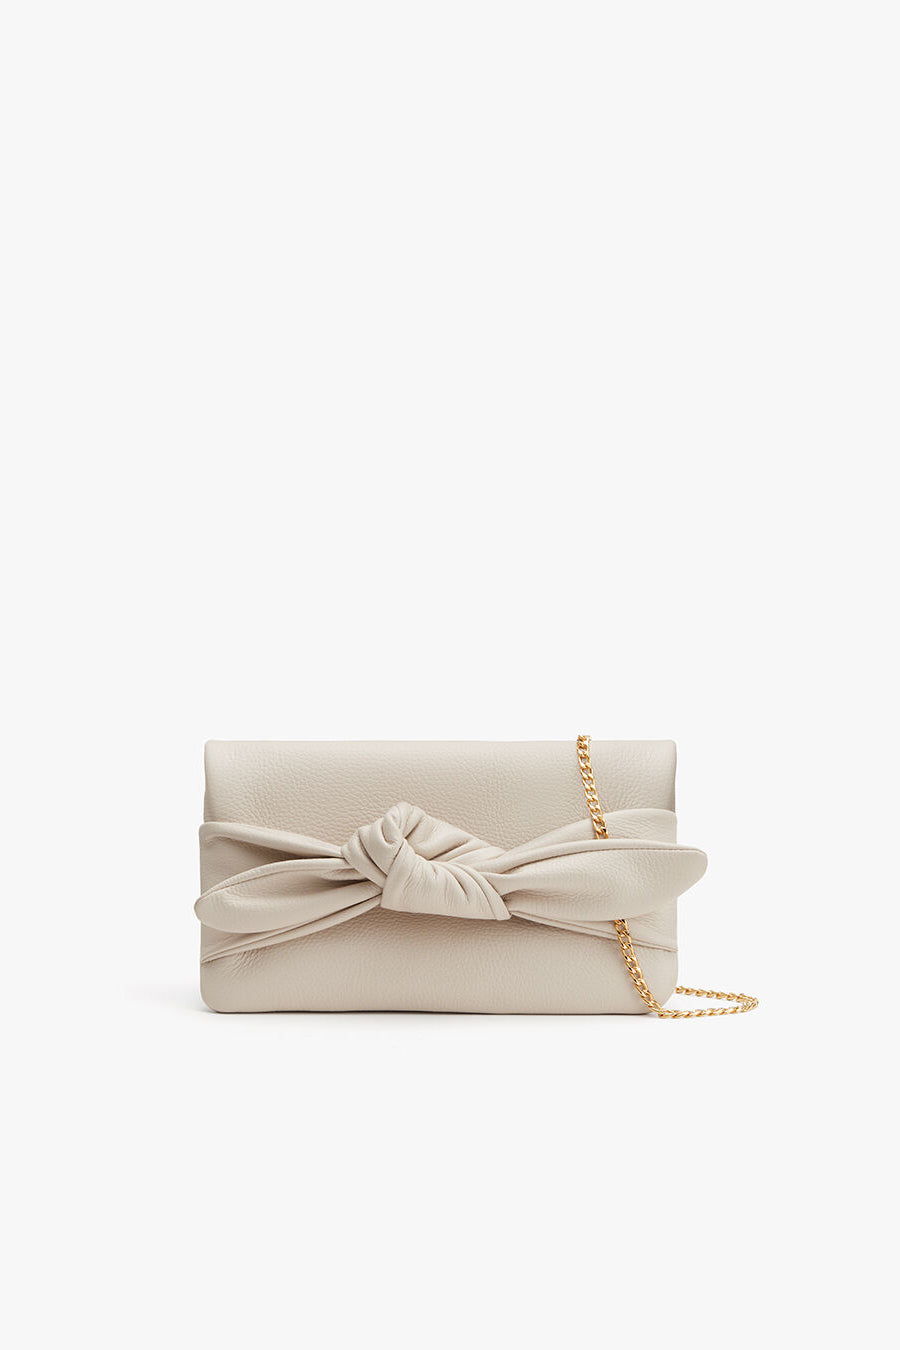 Cuyana + Mini Bow Bag